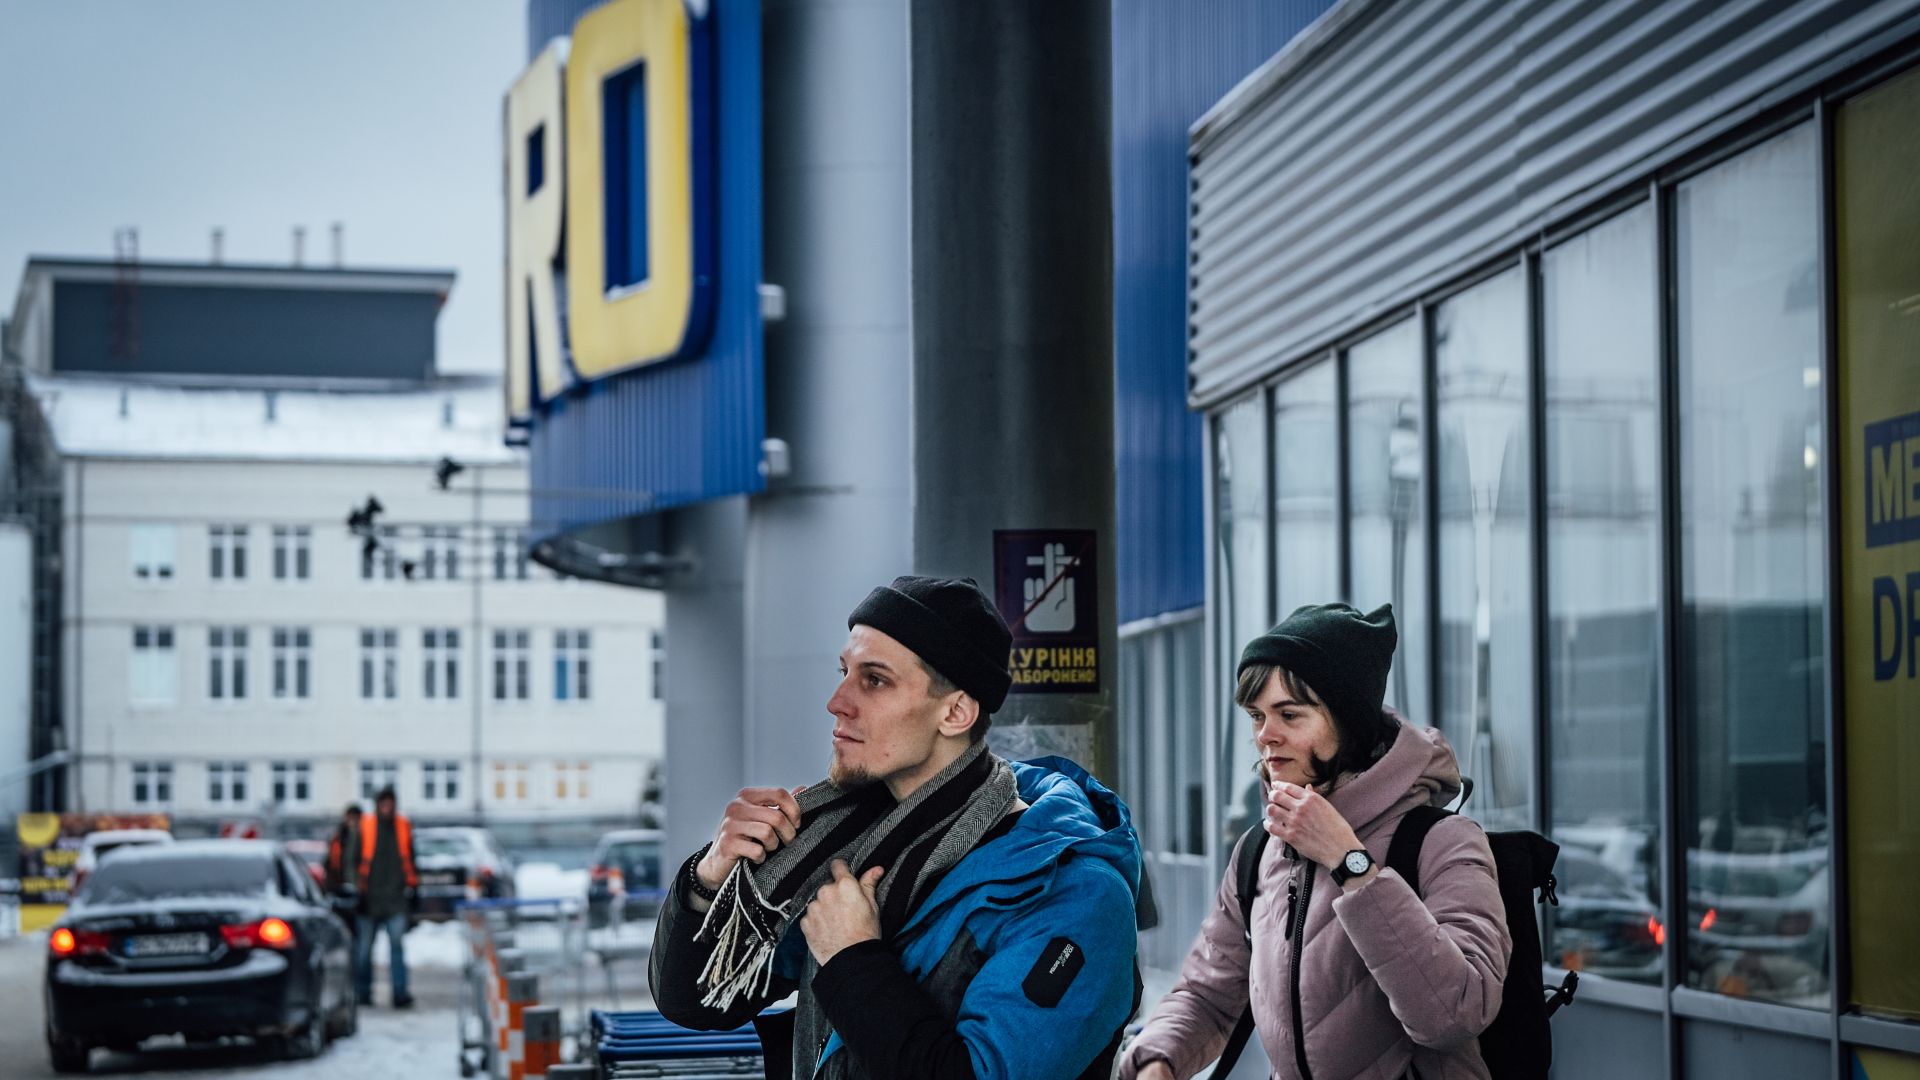 Oleksandr and Iryna outside a supermarket